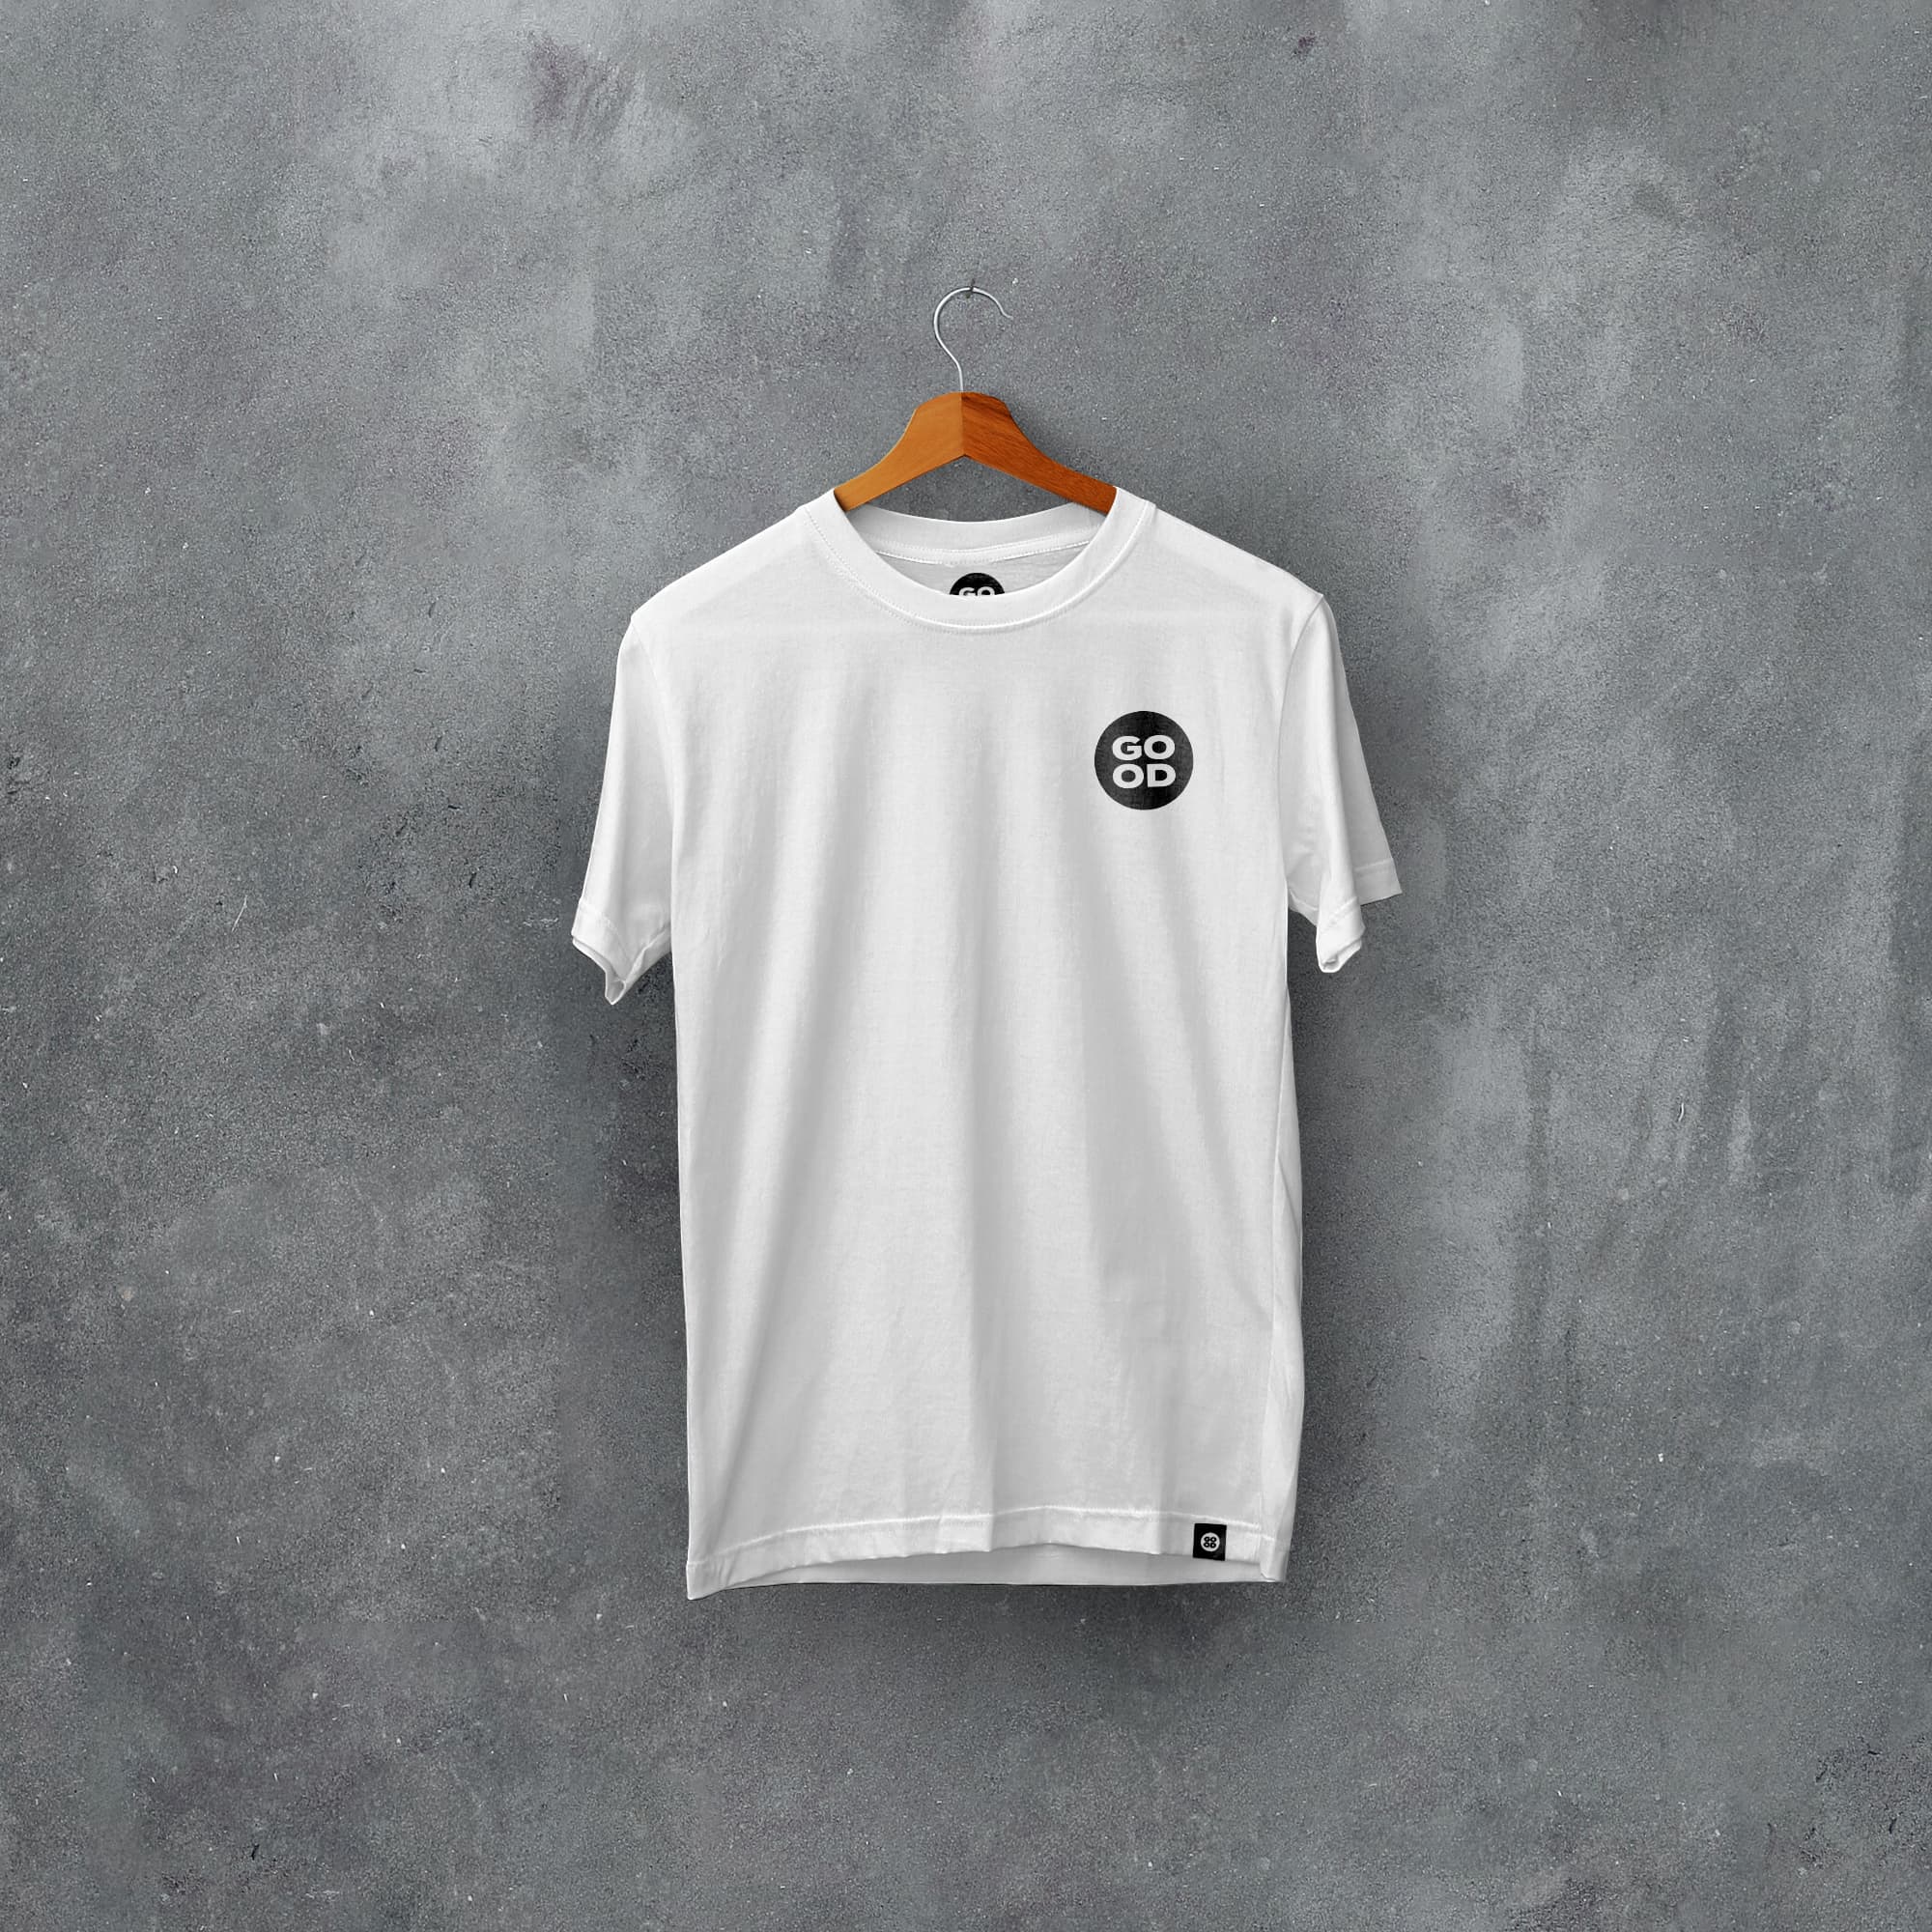 Madrid Classic Kits Football T-Shirt